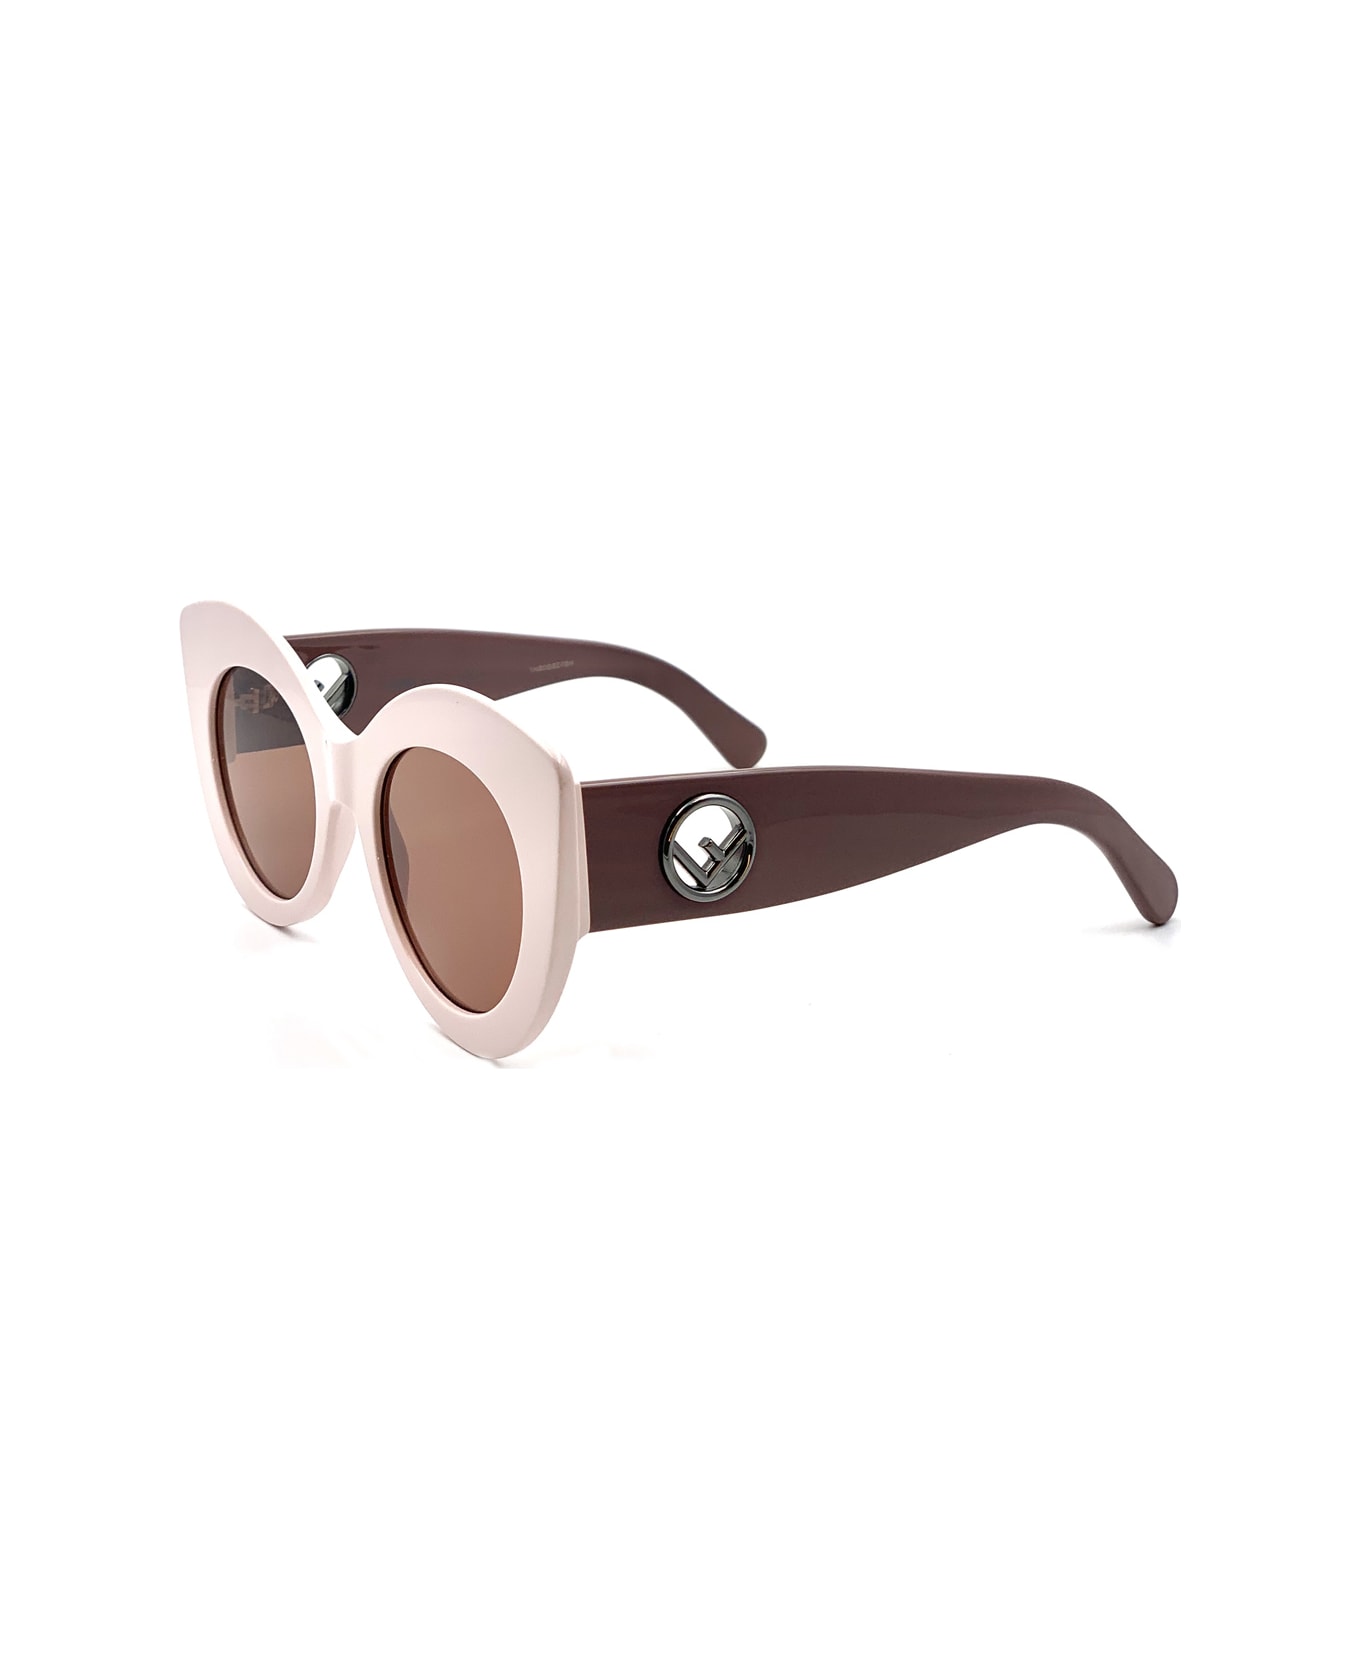 Fendi Eyewear Ff 0306/s Sunglasses - Rosa サングラス